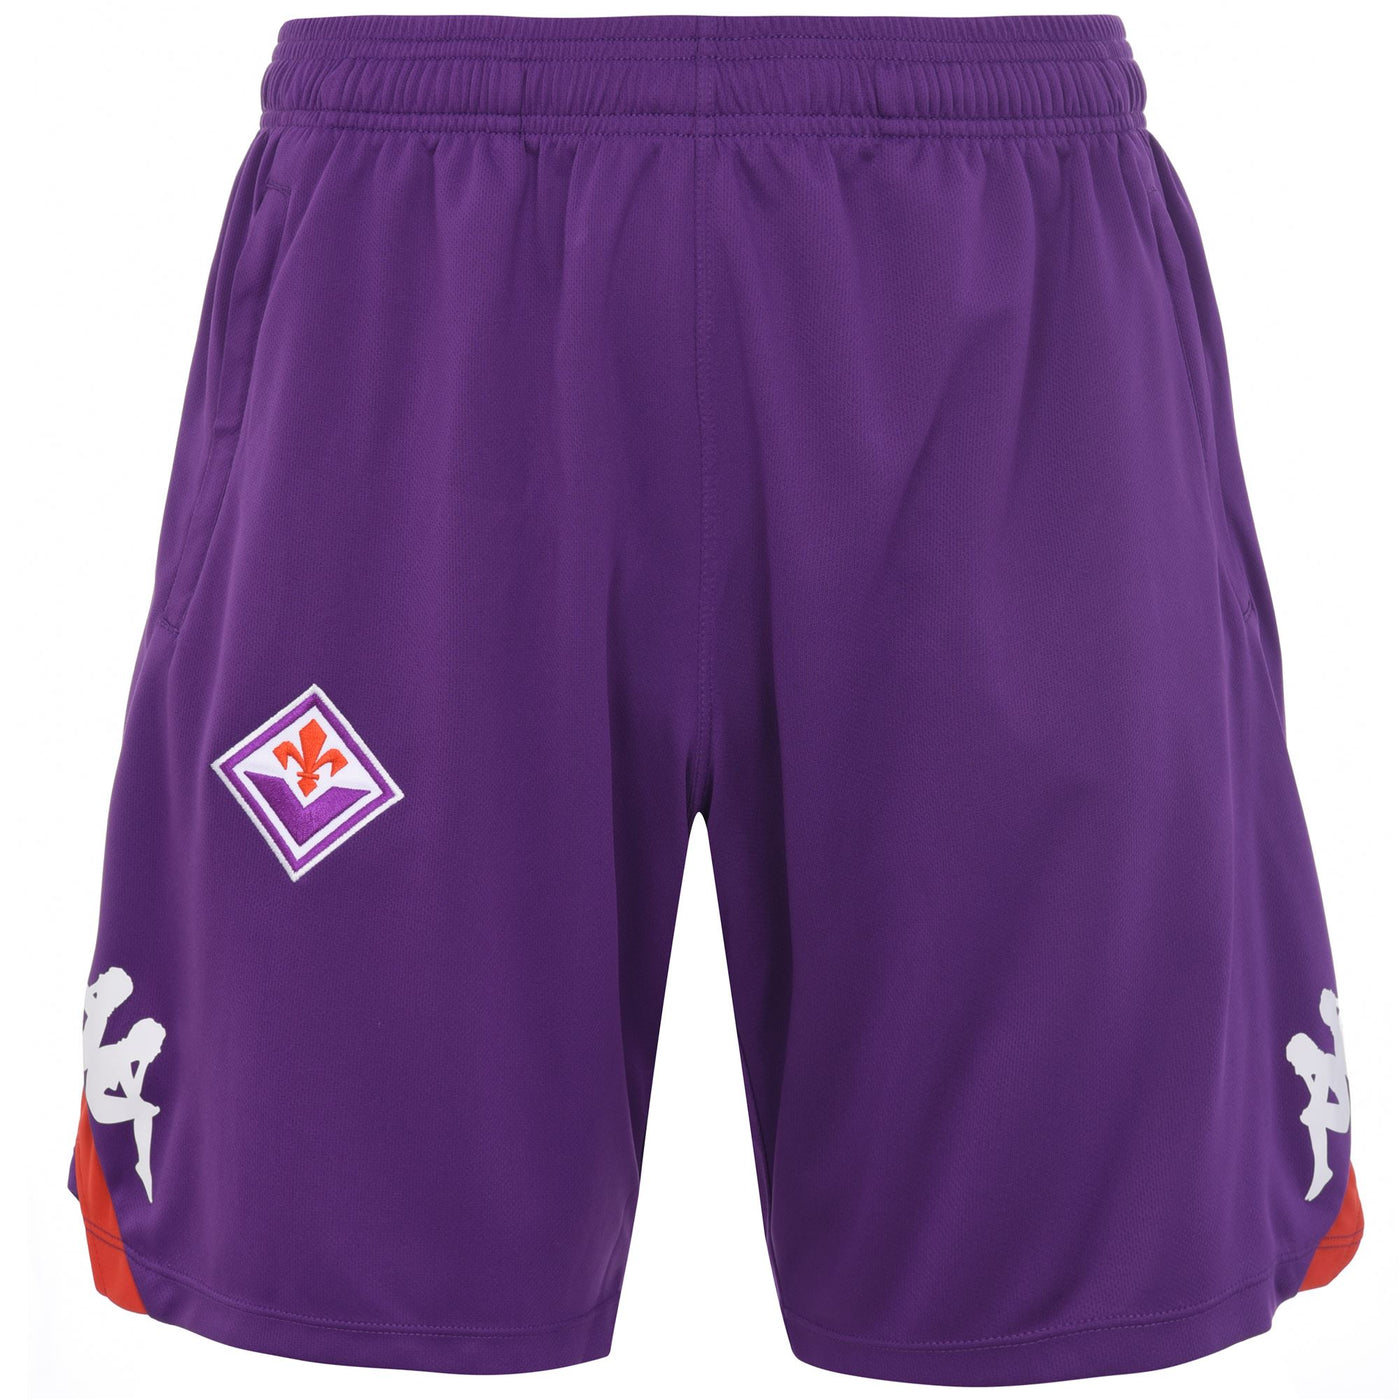 Shorts Man AHORAZIP PRO 6 FIORENTINA Sport  Shorts Violet Indigo-Red Blaze | kappa Photo (jpg Rgb)			